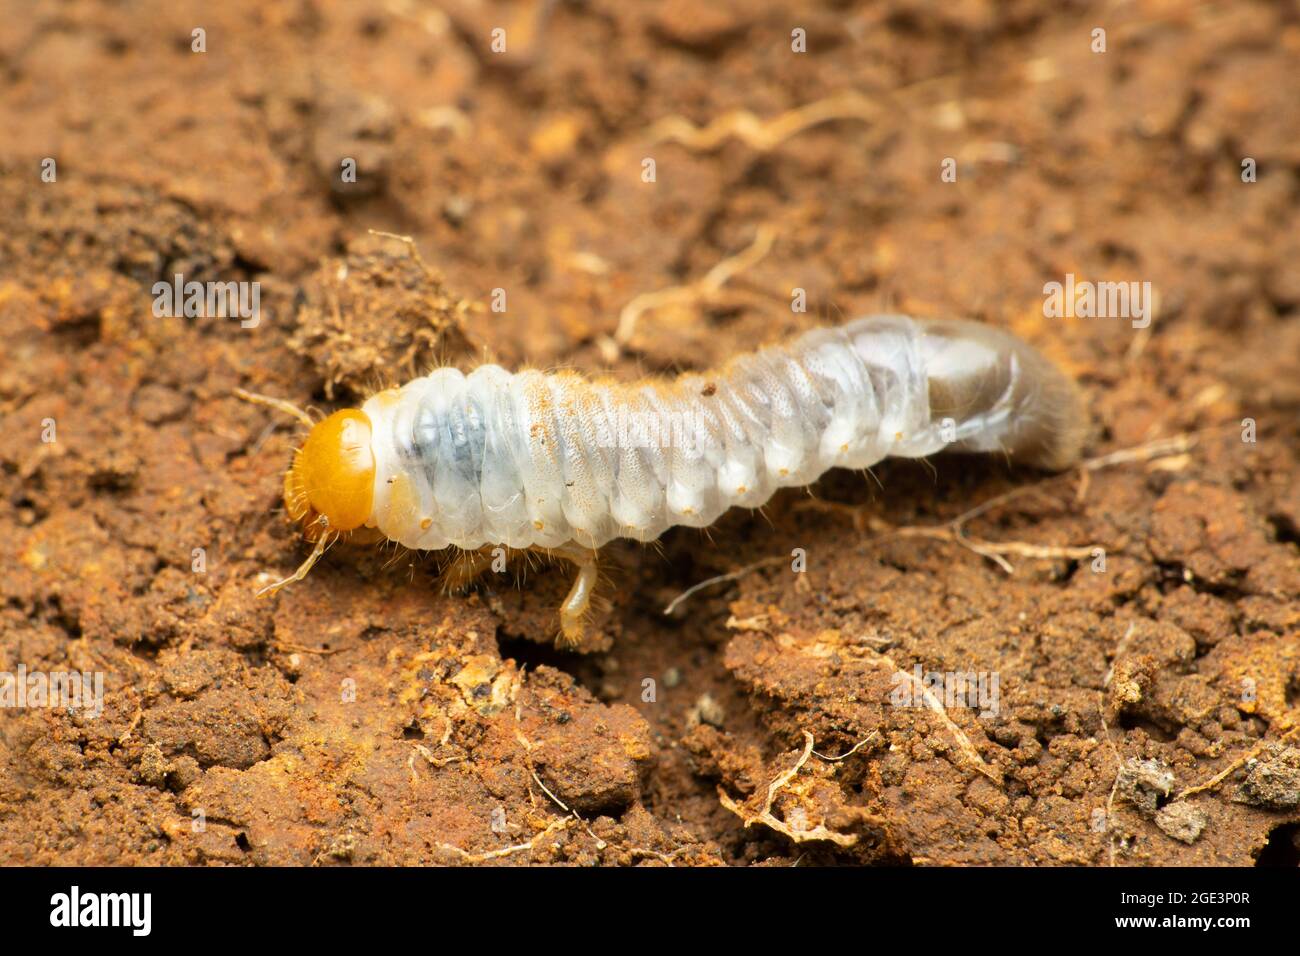 Beetle larvae, Satara, Maharashtra, India Stock Photo